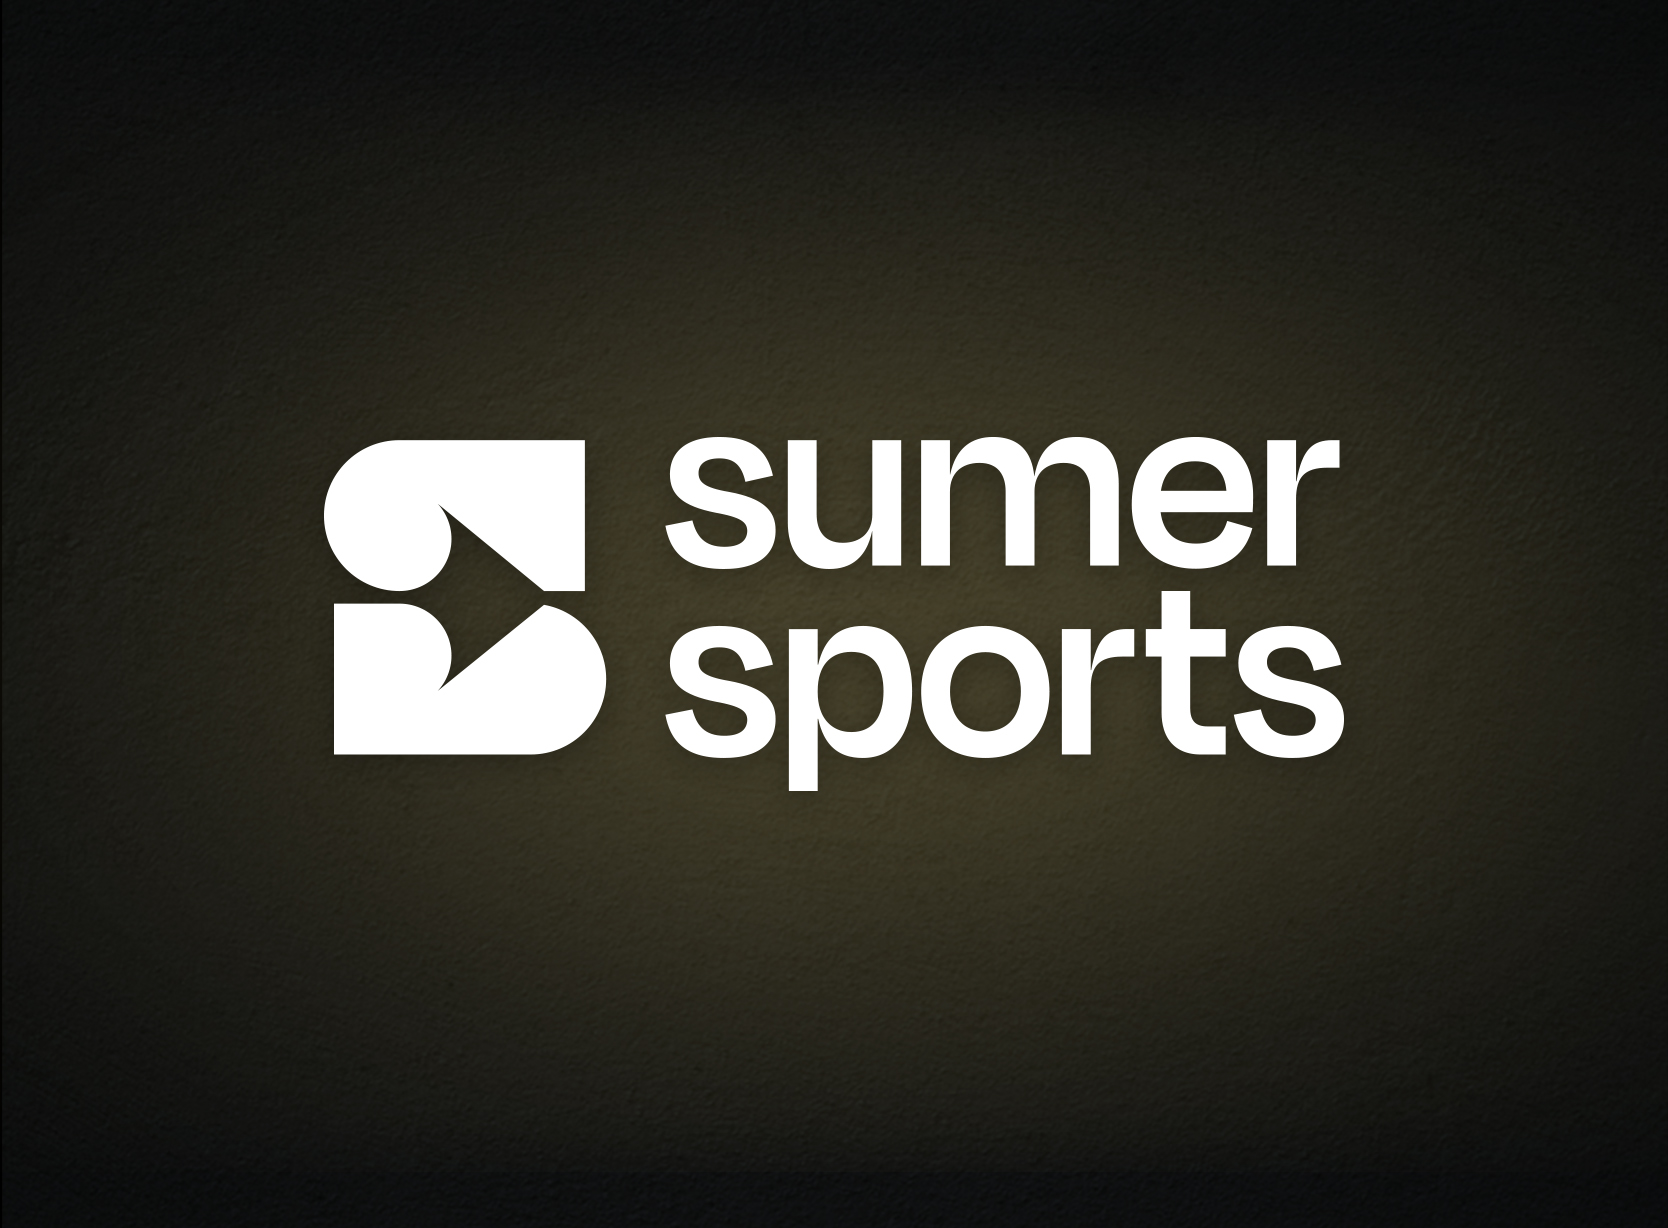 SumerSports logo on a black textured background